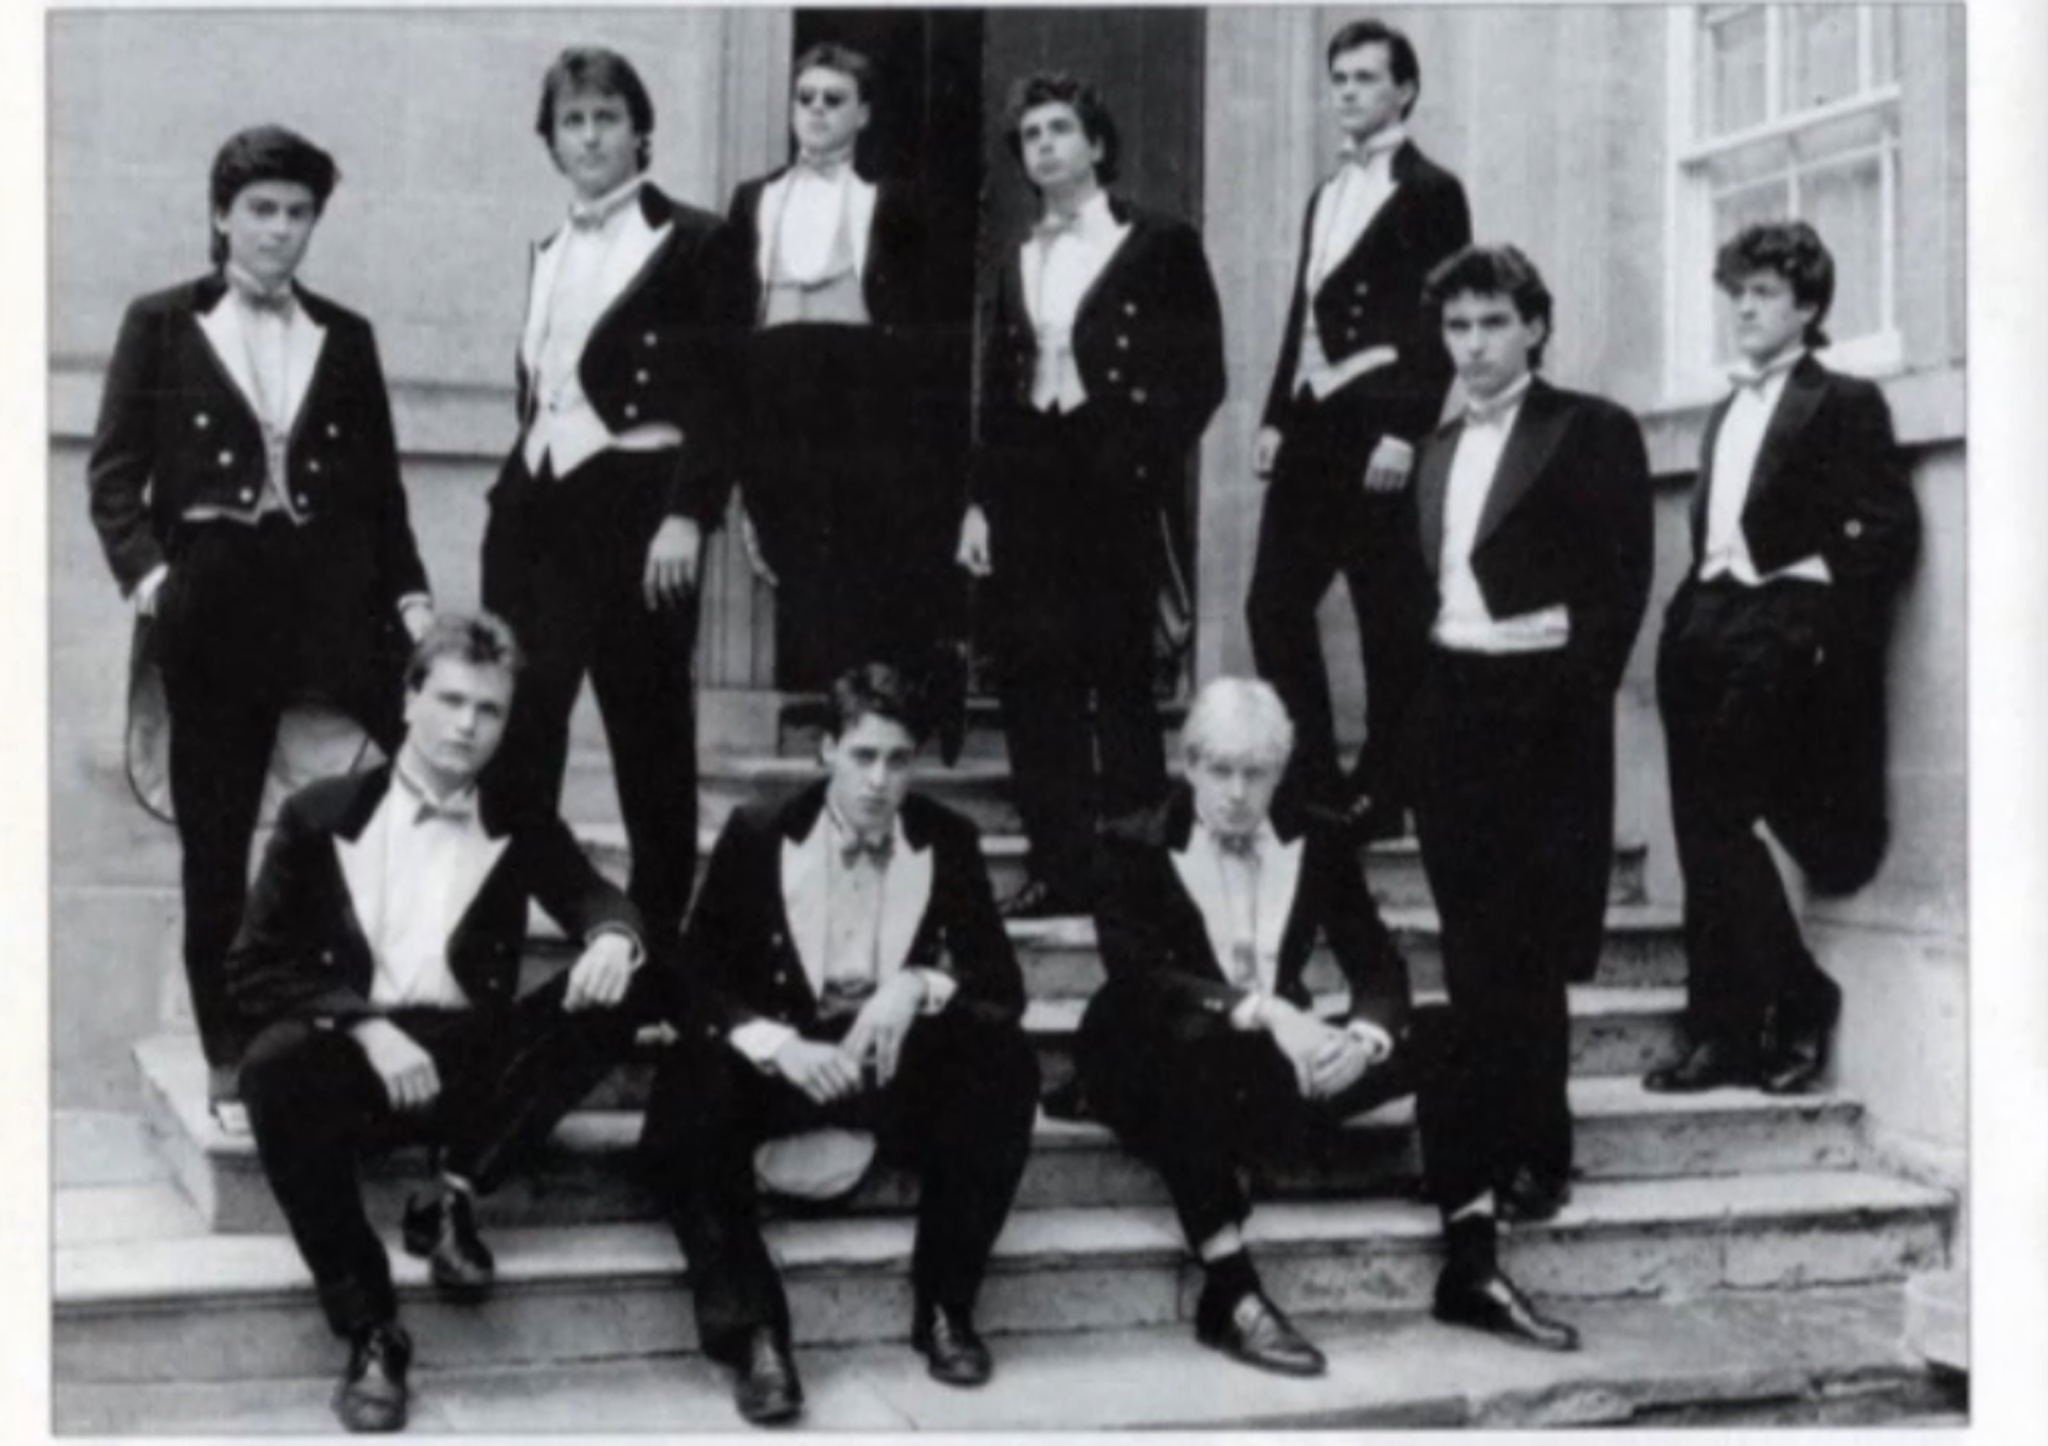 David Cameron and Boris Johnson pictured with the Bullingdon Club